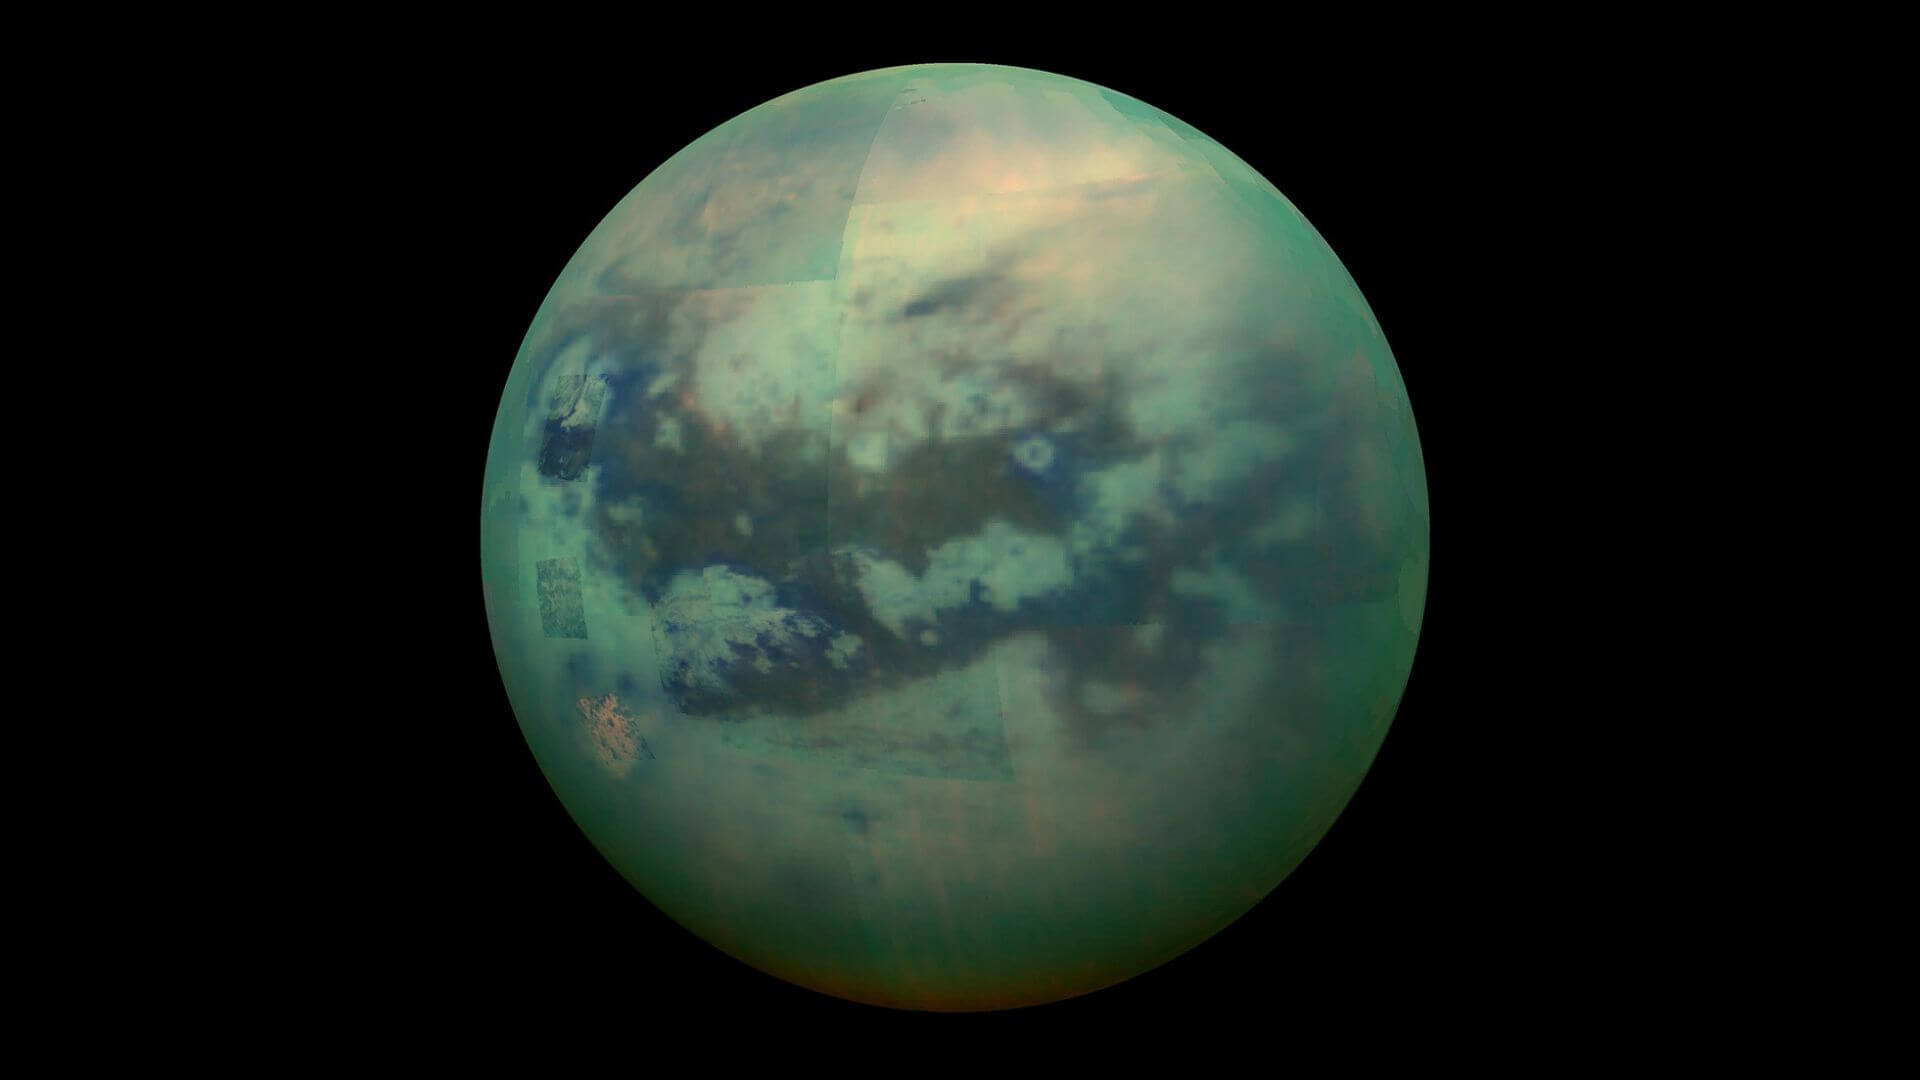 Складена повна карта поверхні Титану